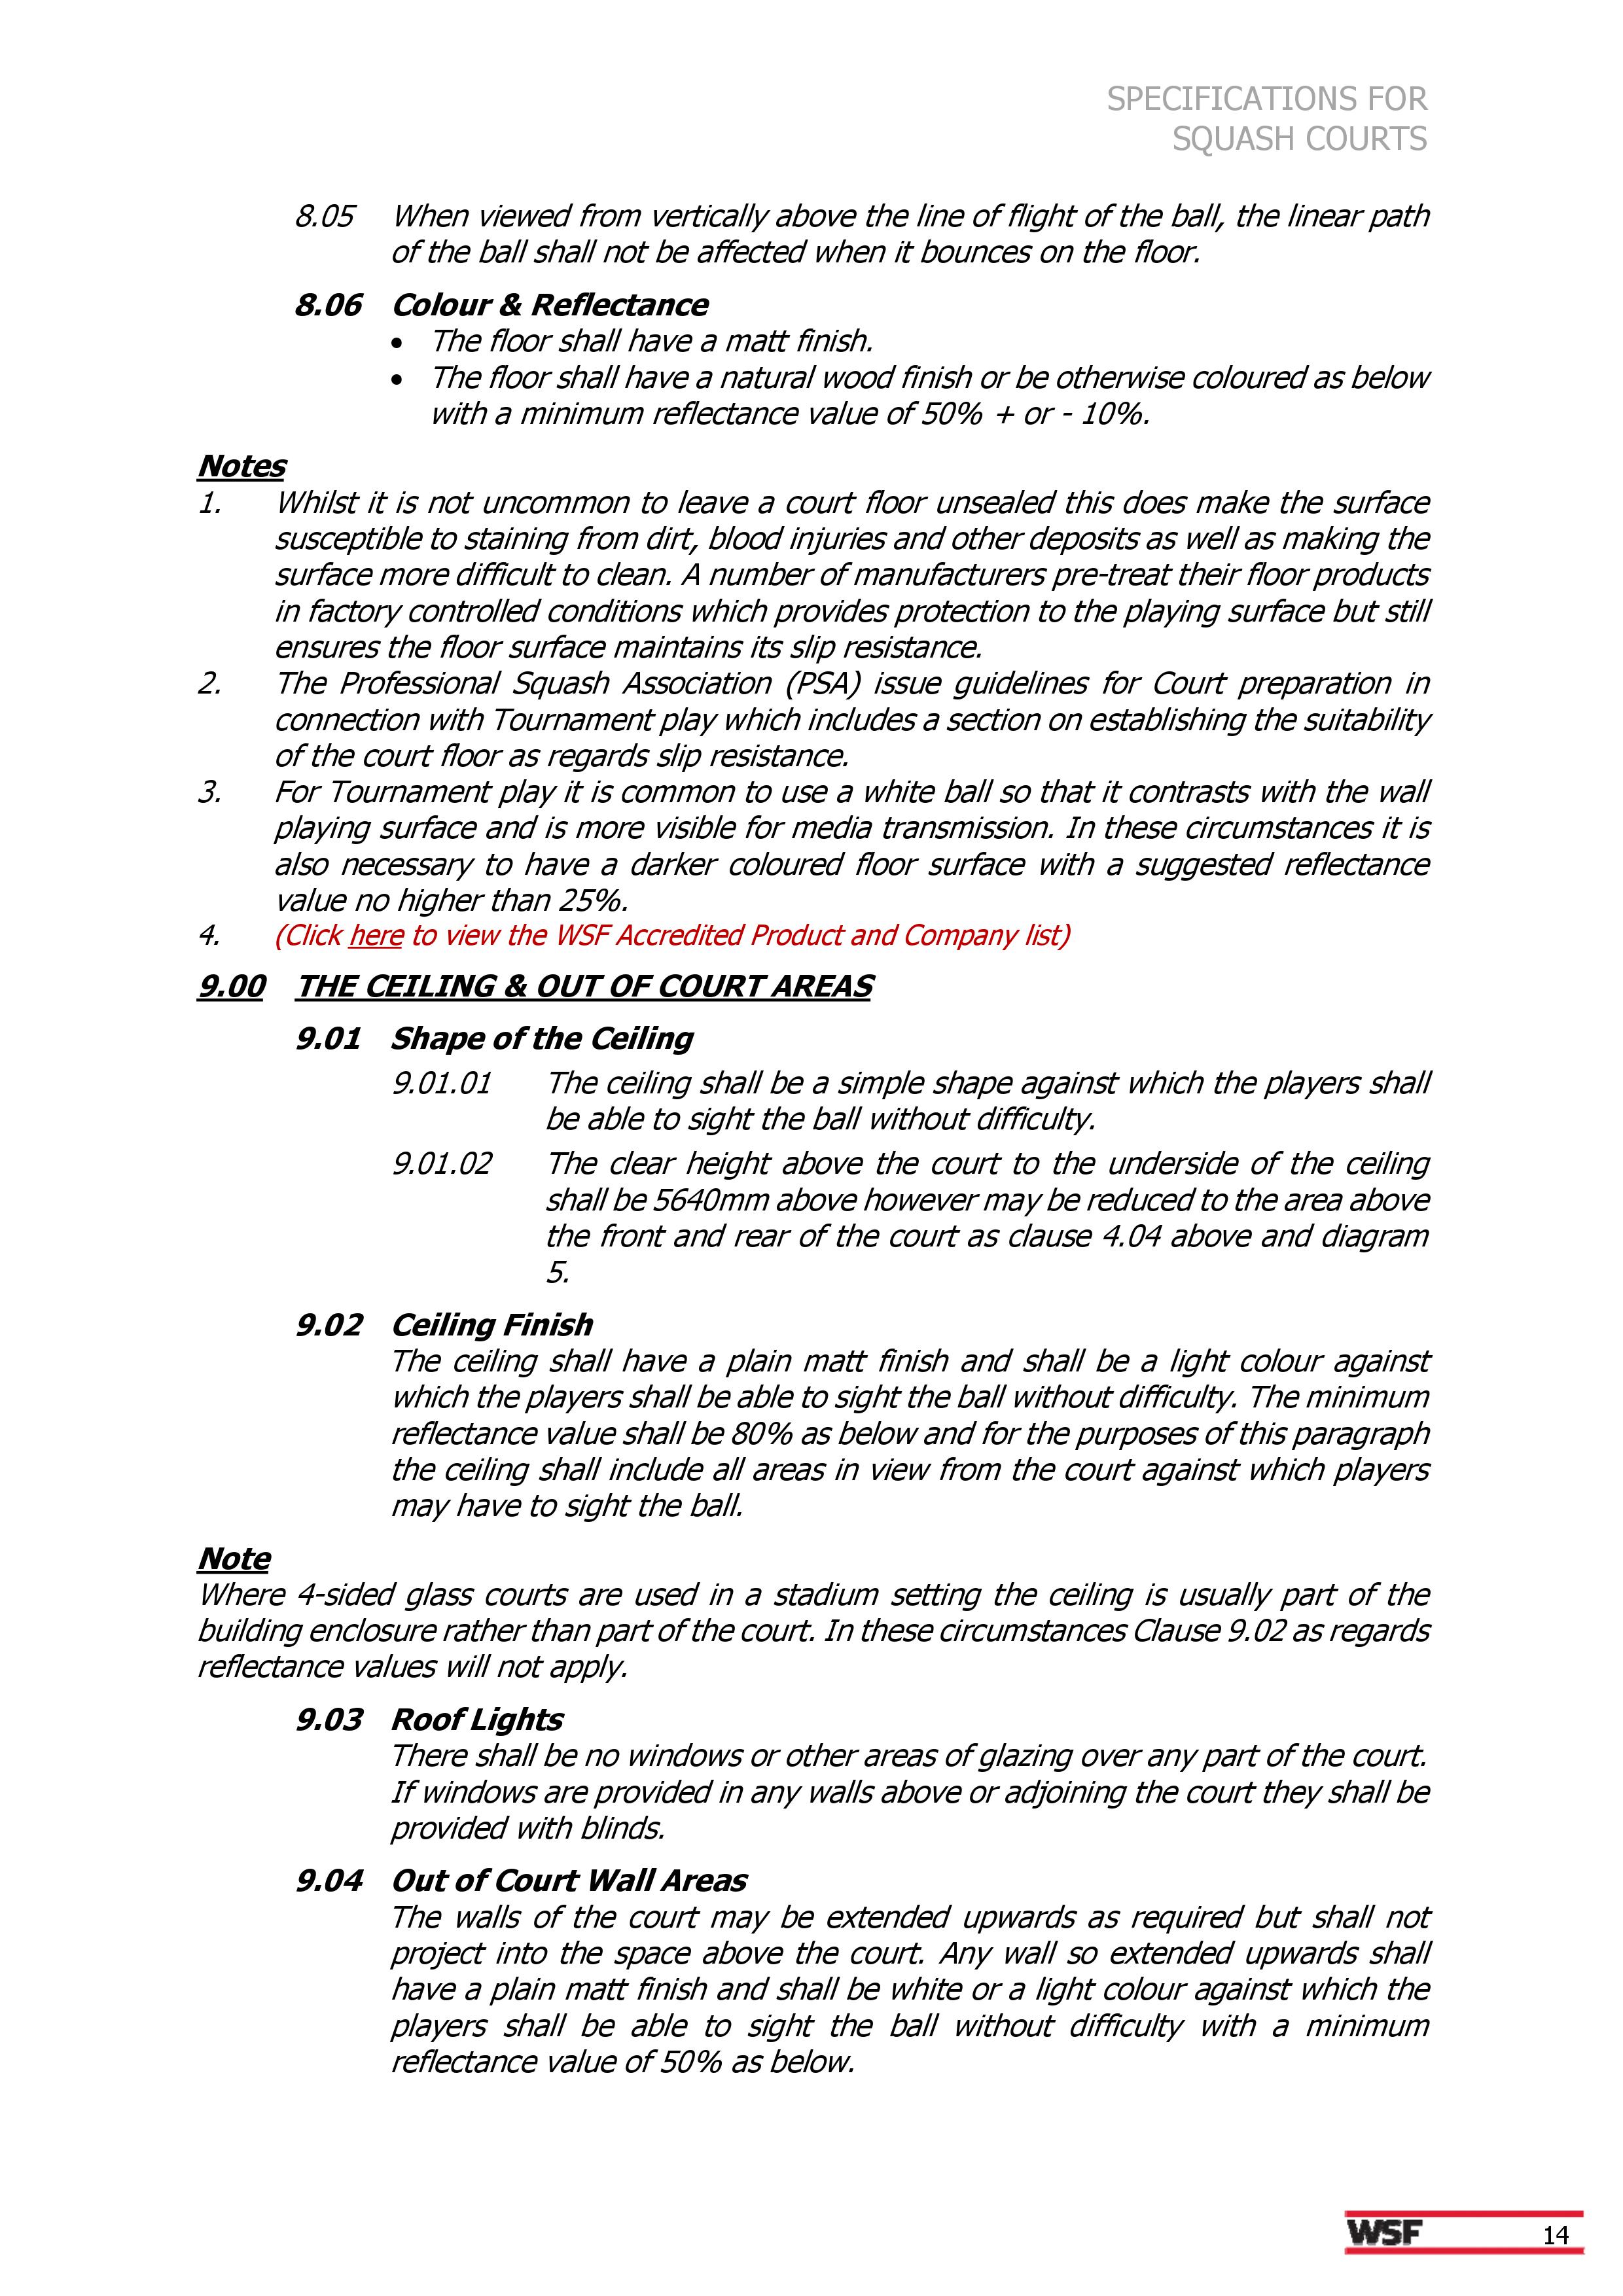 World Squash Federation Squash Court Specifications - Global Squash Coach - Page 16.jpg